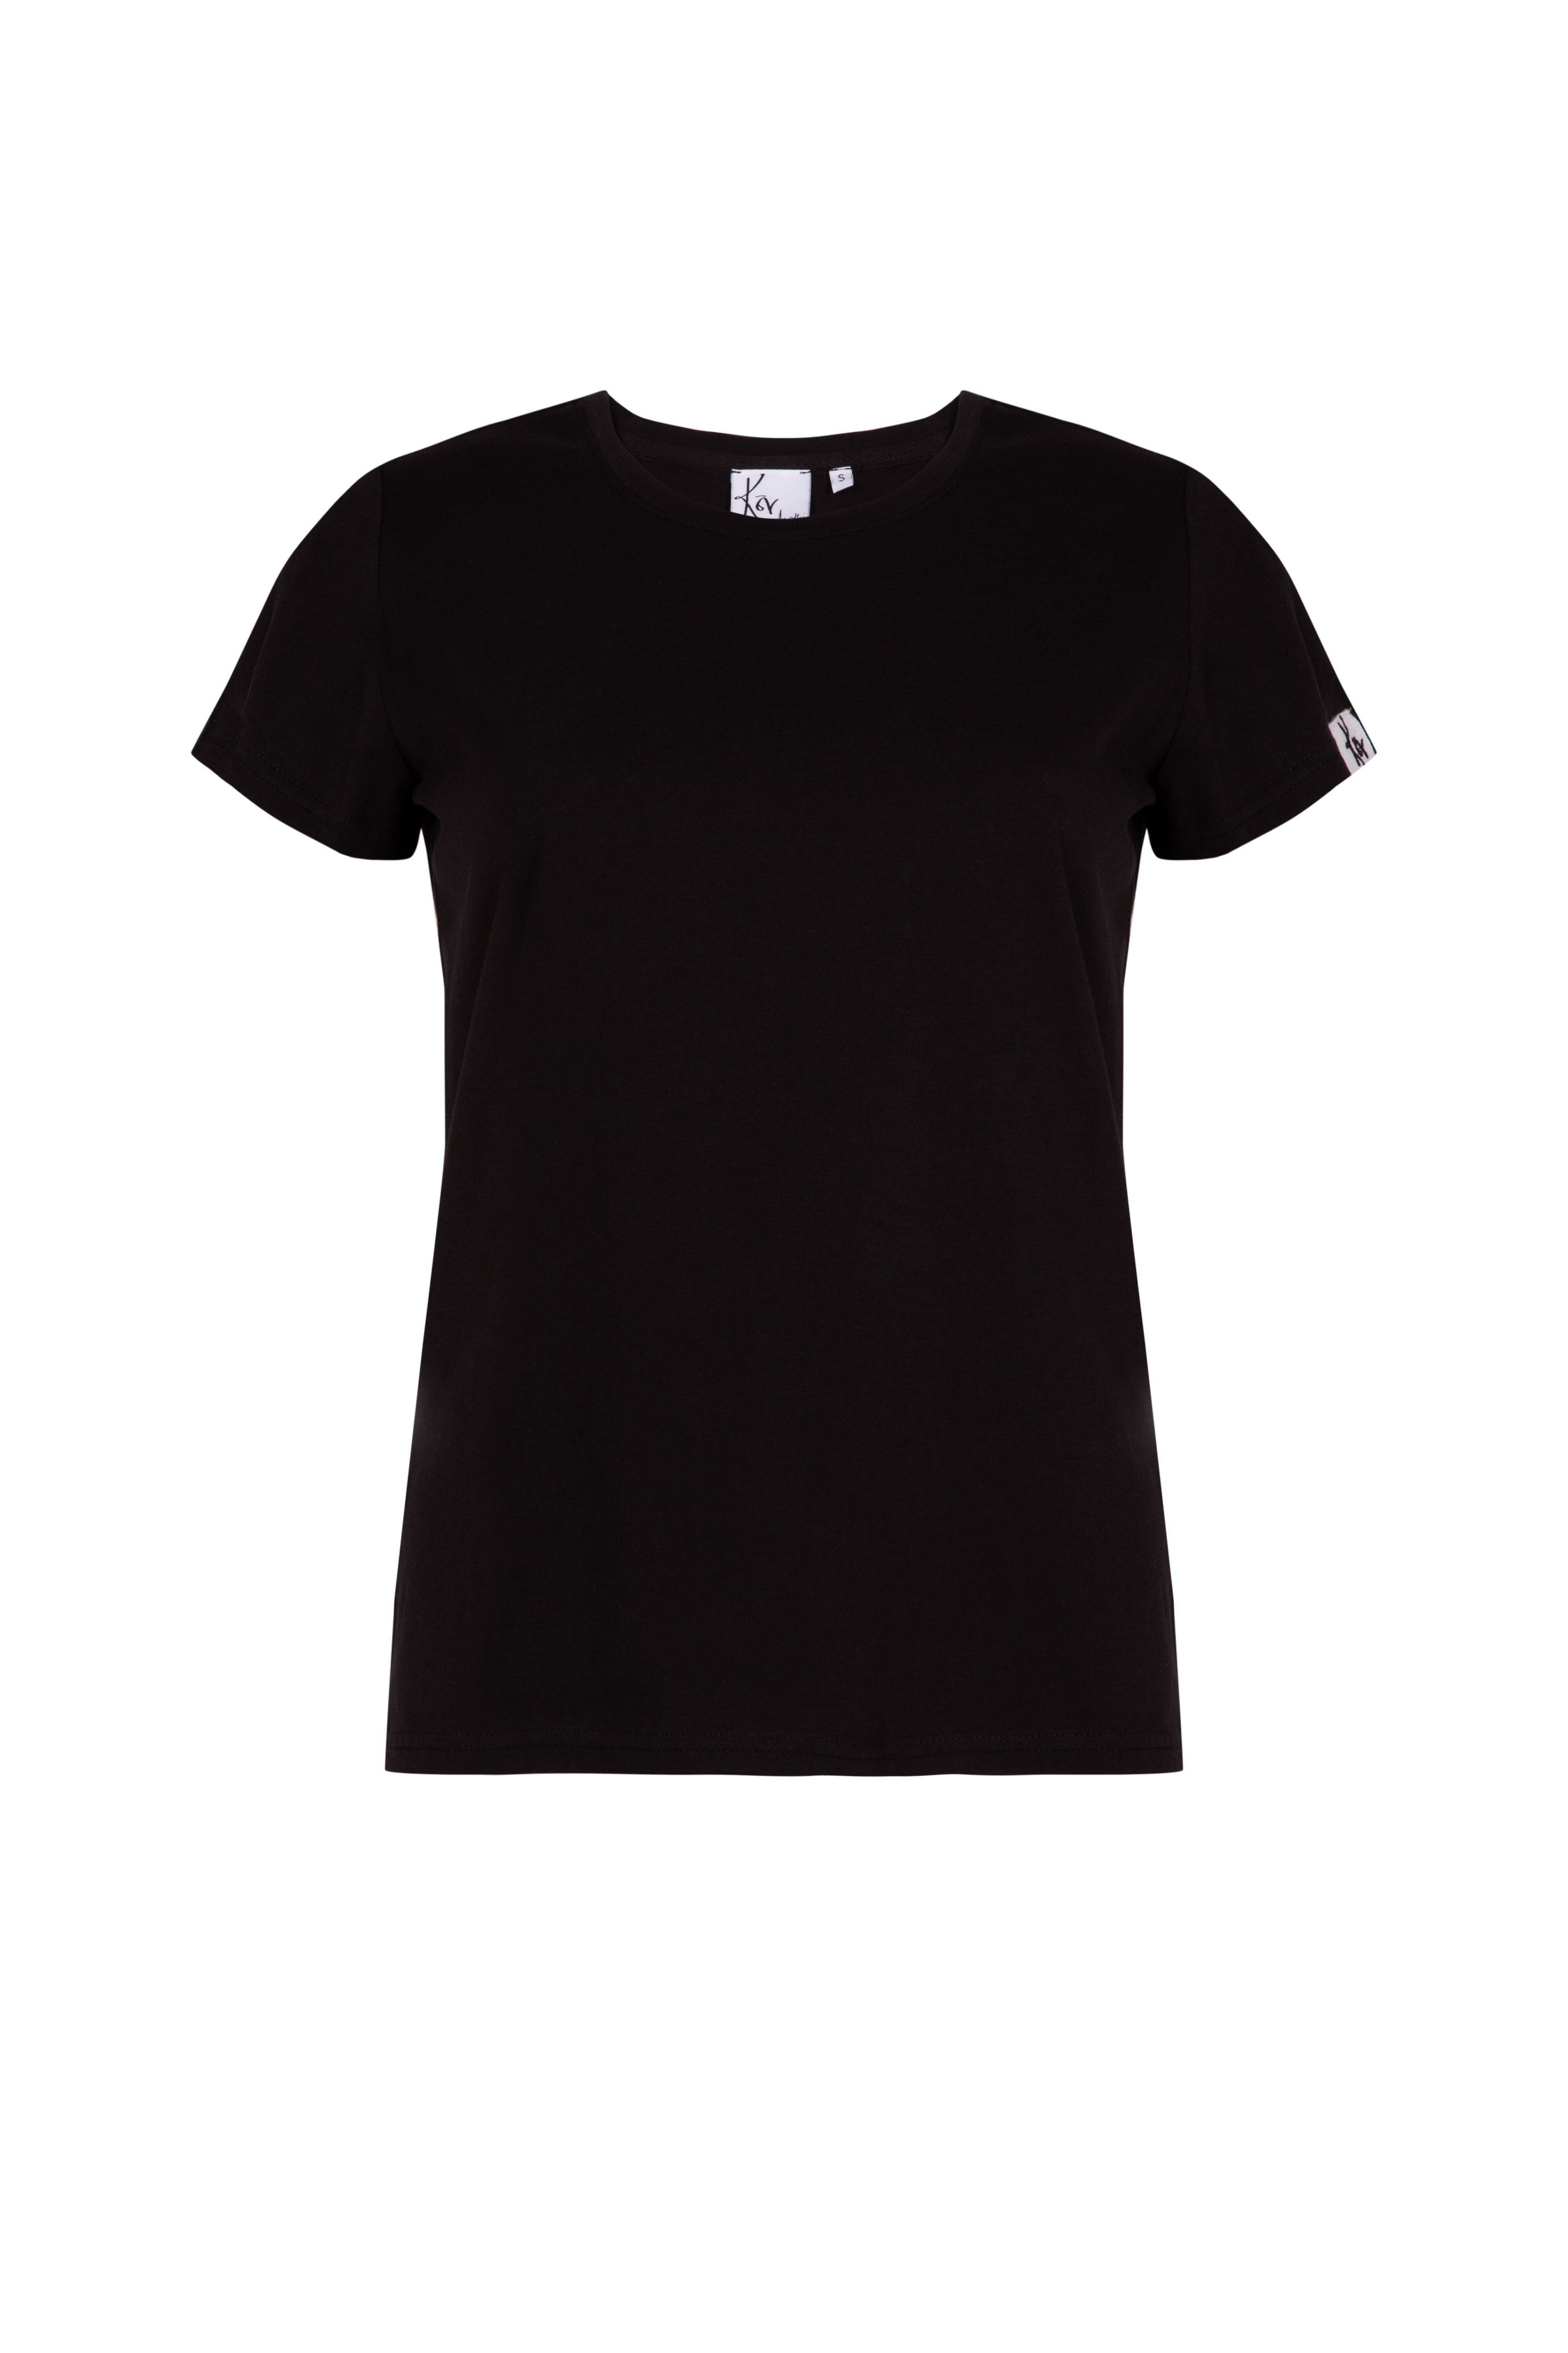 Black organic cotton basic fit women's t-shirt